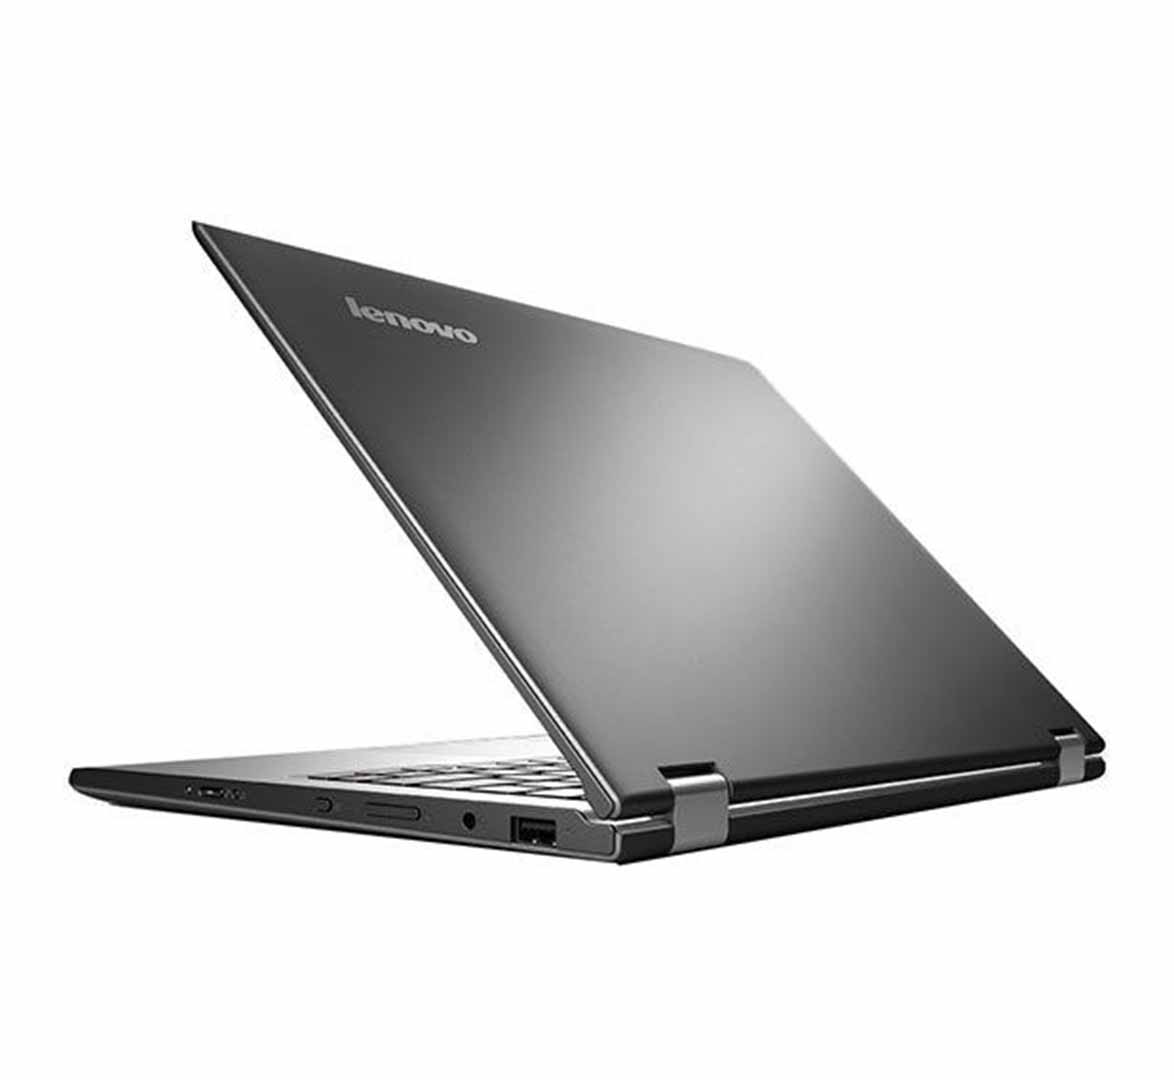 Lenovo Yoga 2-11 Business Laptop, Intel Core i3-4th Gen CPU, 4GB RAM, 128GB SSD, 11.6 inch Touchscreen 360°, Windows 10, Refurbished Laptop